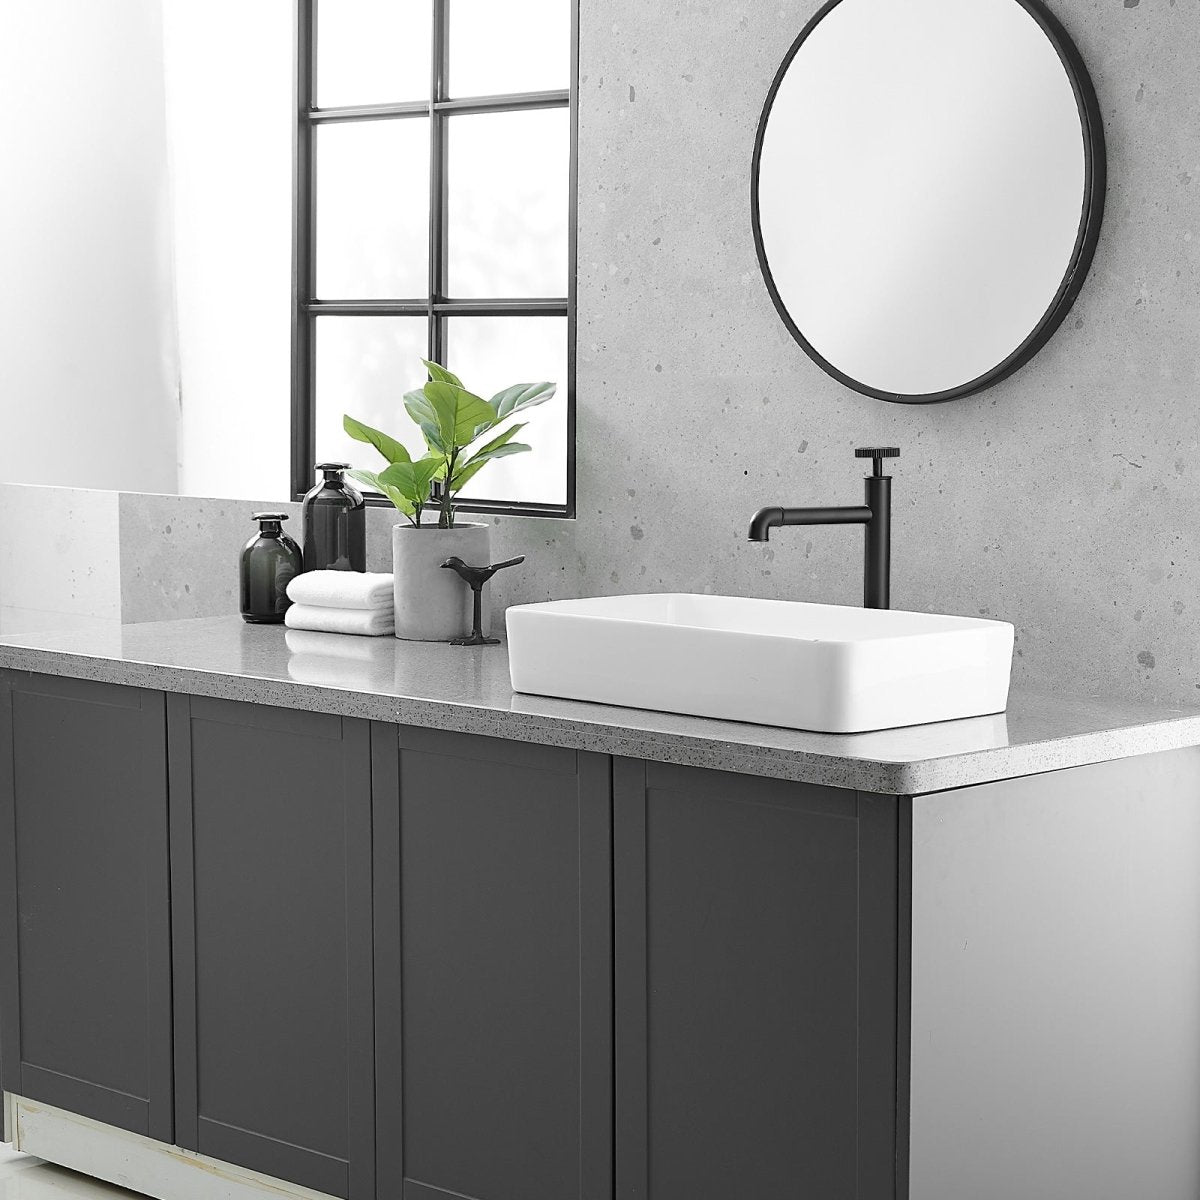 Industry Style Single Handle Vessel Sink Bathroom Faucet Black-1 - buyfaucet.com